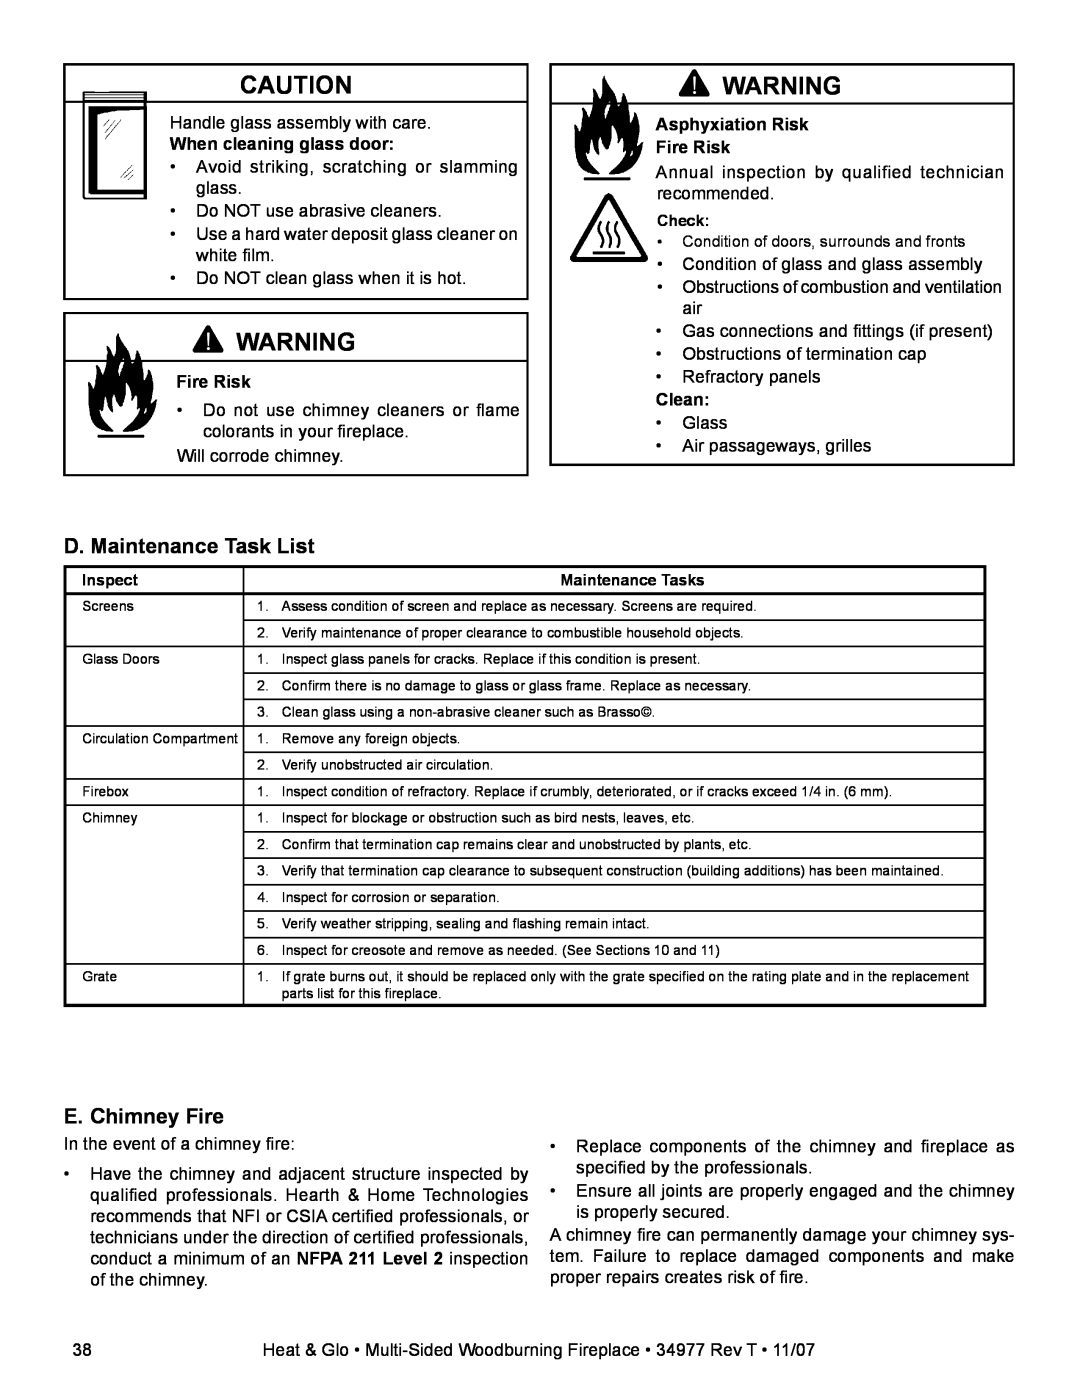 Heat & Glo LifeStyle BAY-40 D. Maintenance Task List, E. Chimney Fire, When cleaning glass door, Fire Risk, Clean 